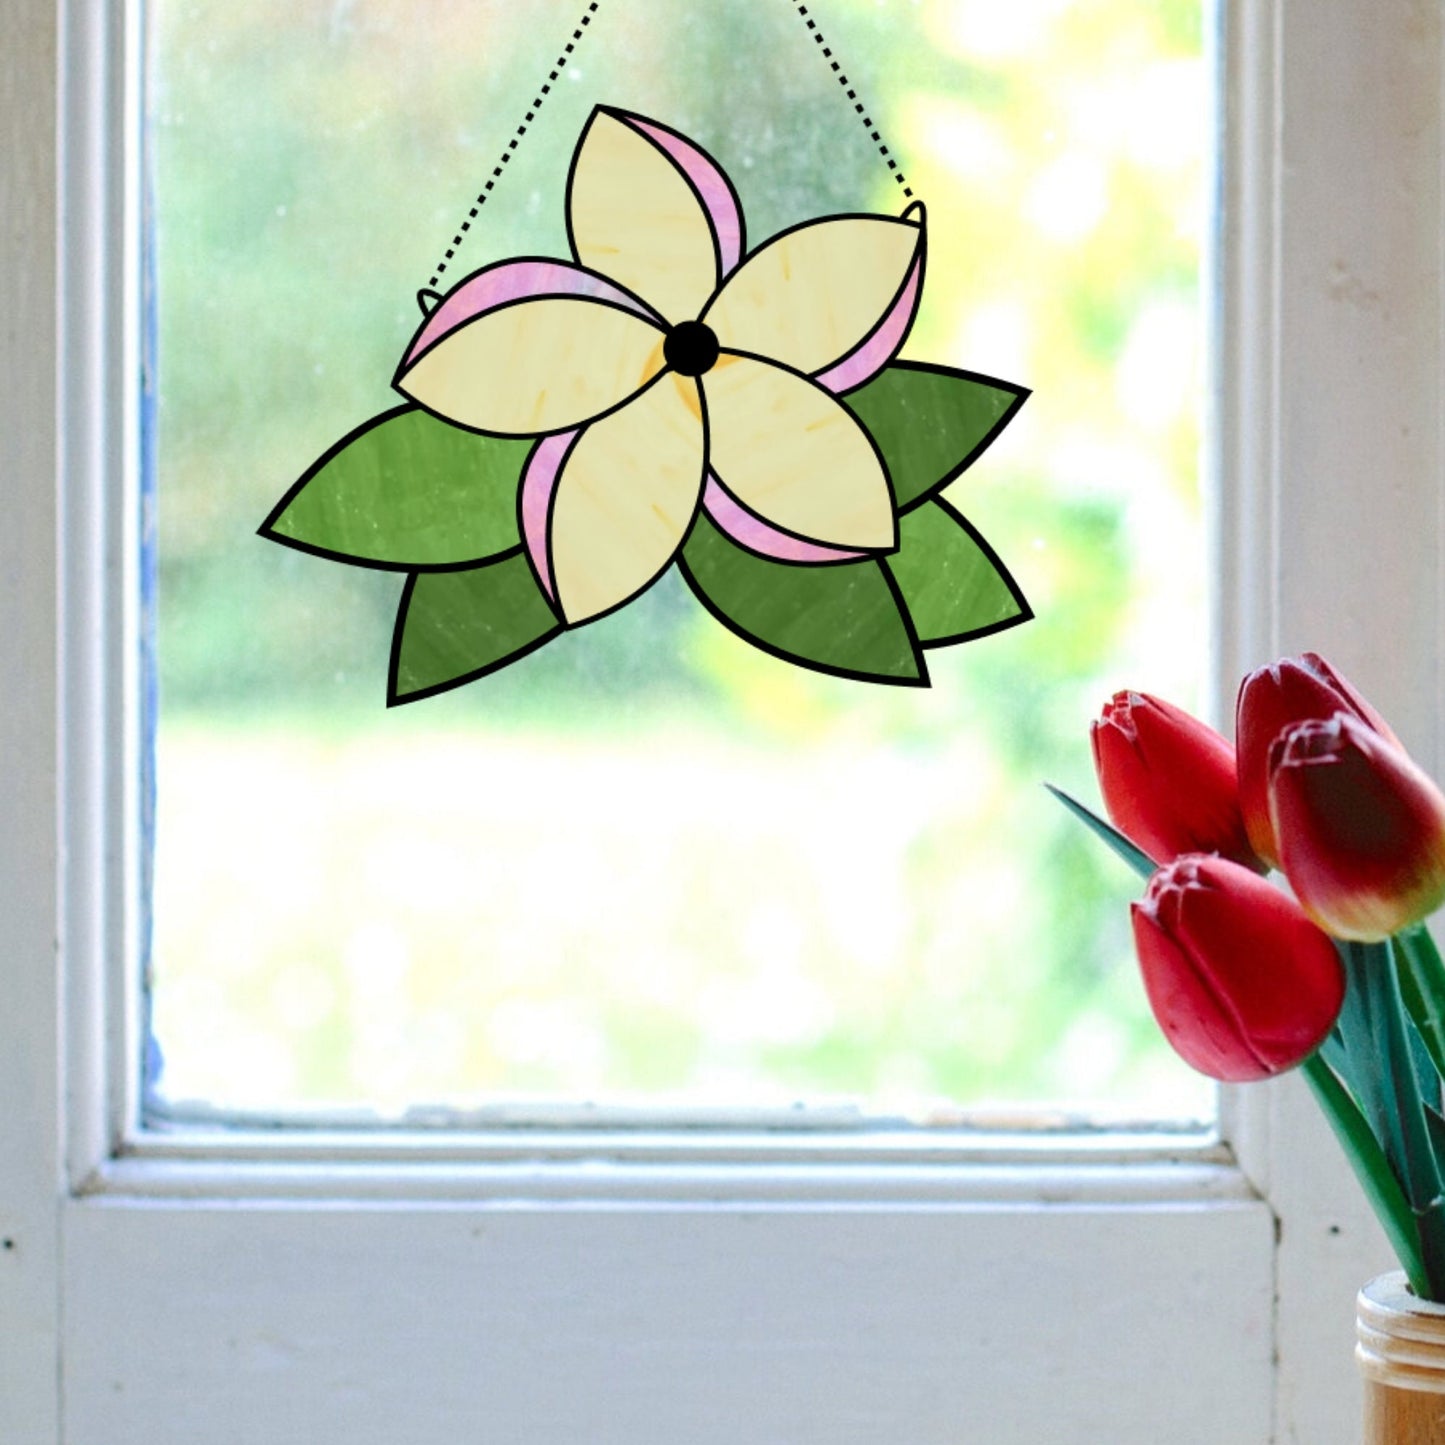 Plumeria Flower Stained Glass Pattern